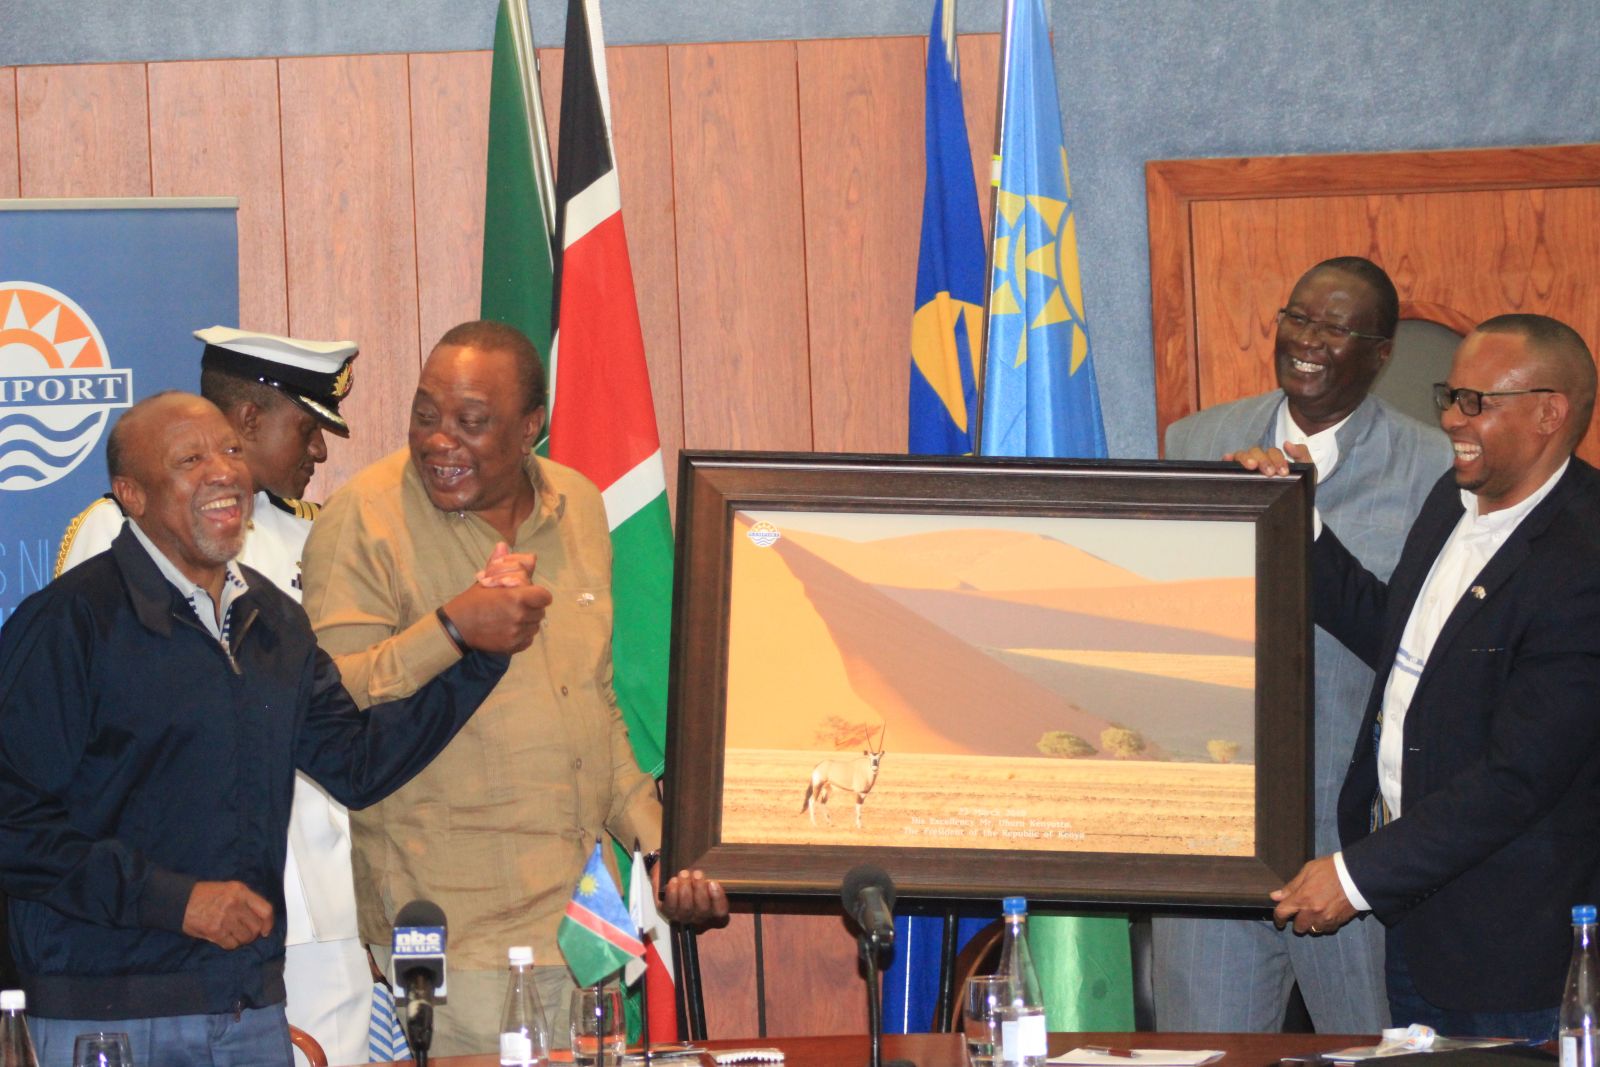 Namport welcomes H.E. Uhuru Kenyatta, President of the Republic of Kenya